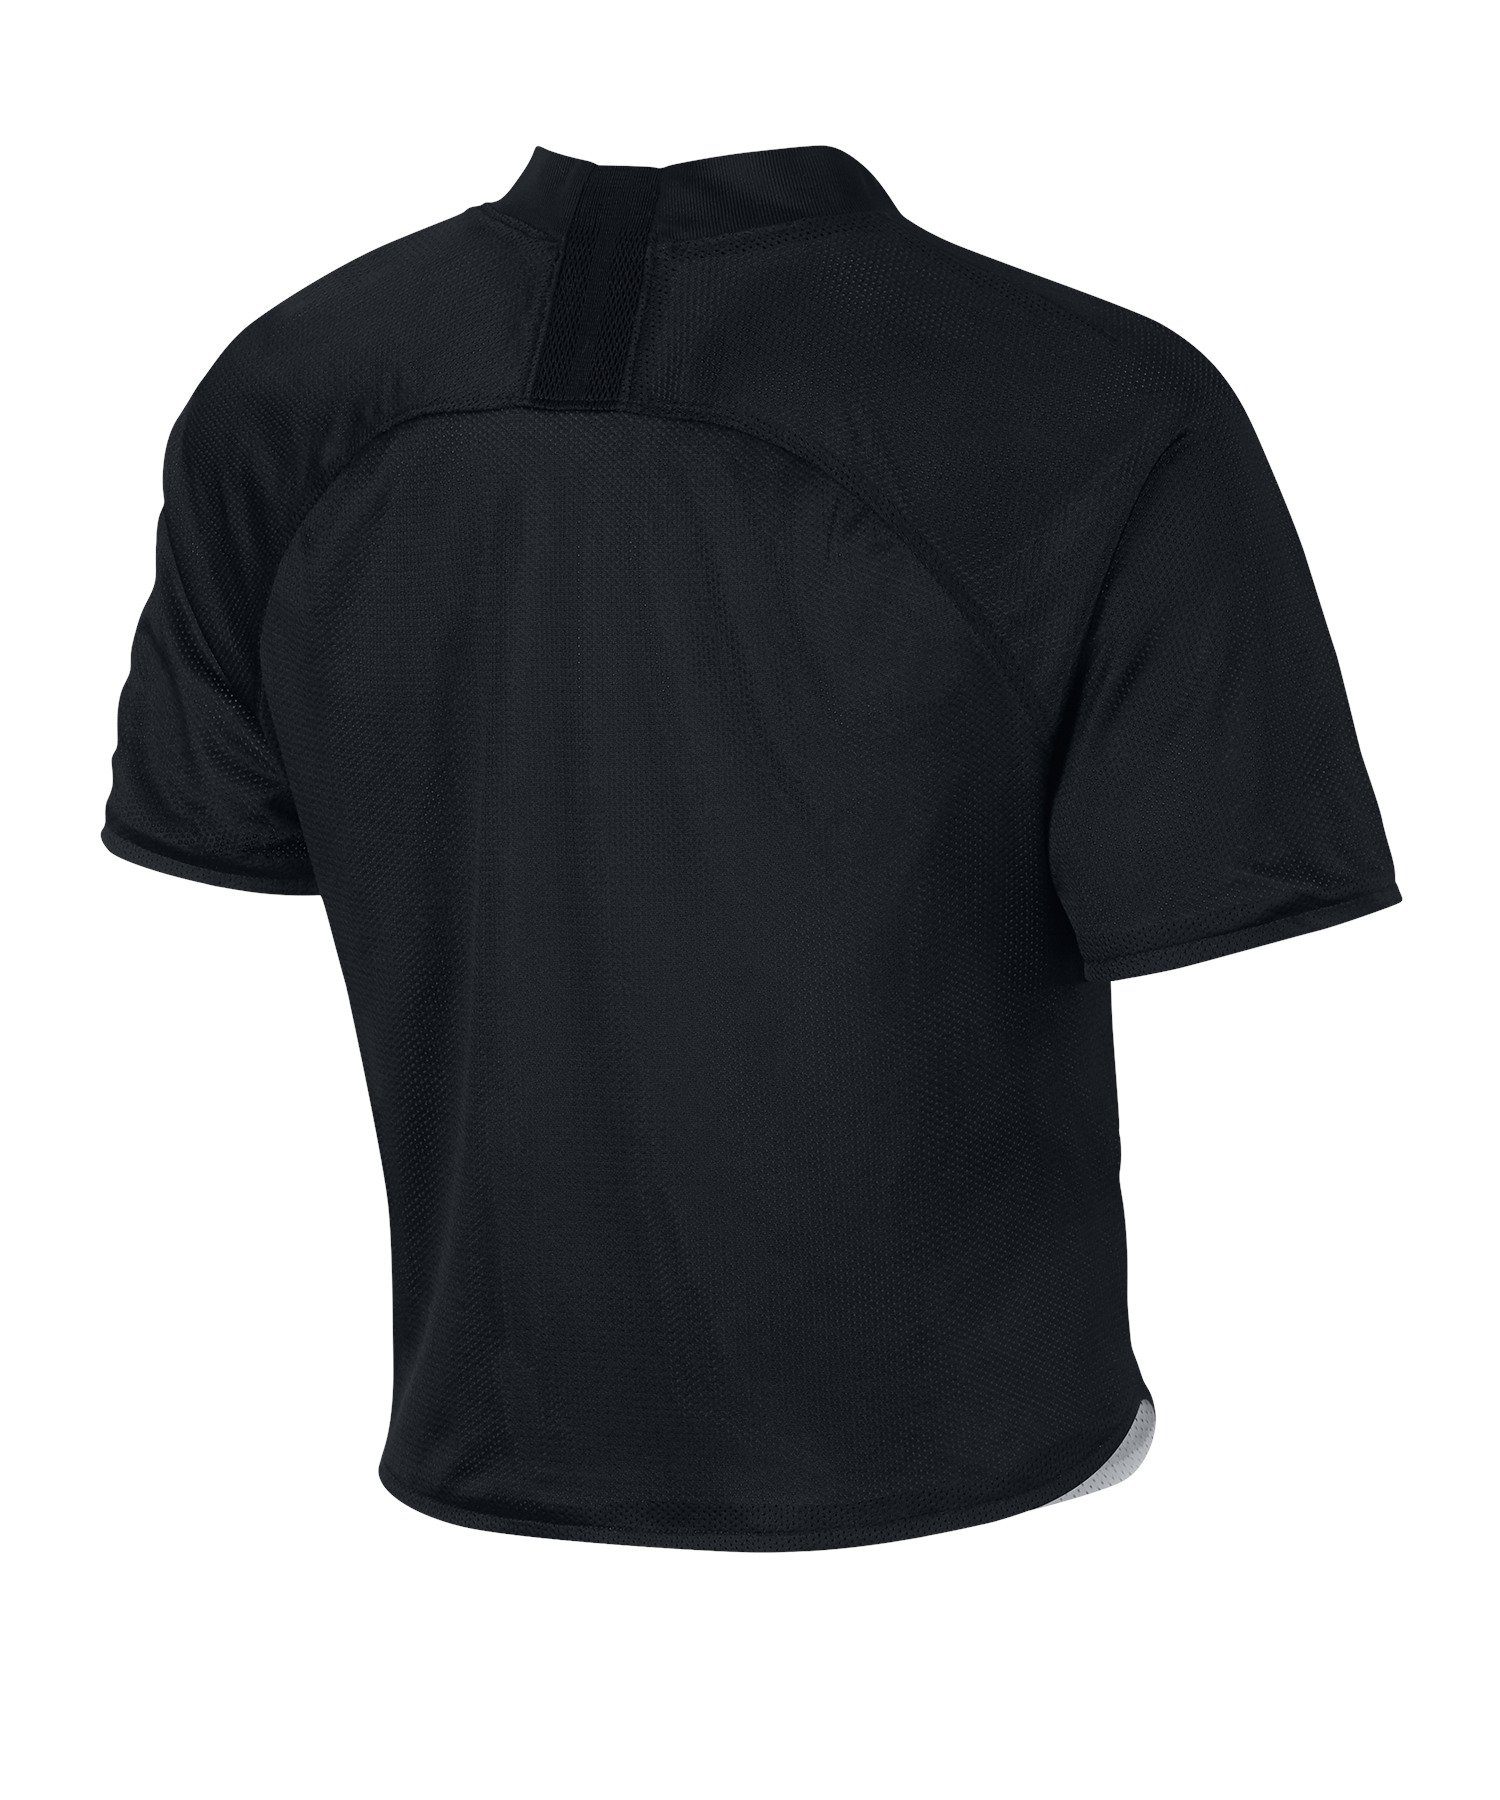 Nike Sportswear T-Shirt Top Schwarz Crop F.C. Damen default